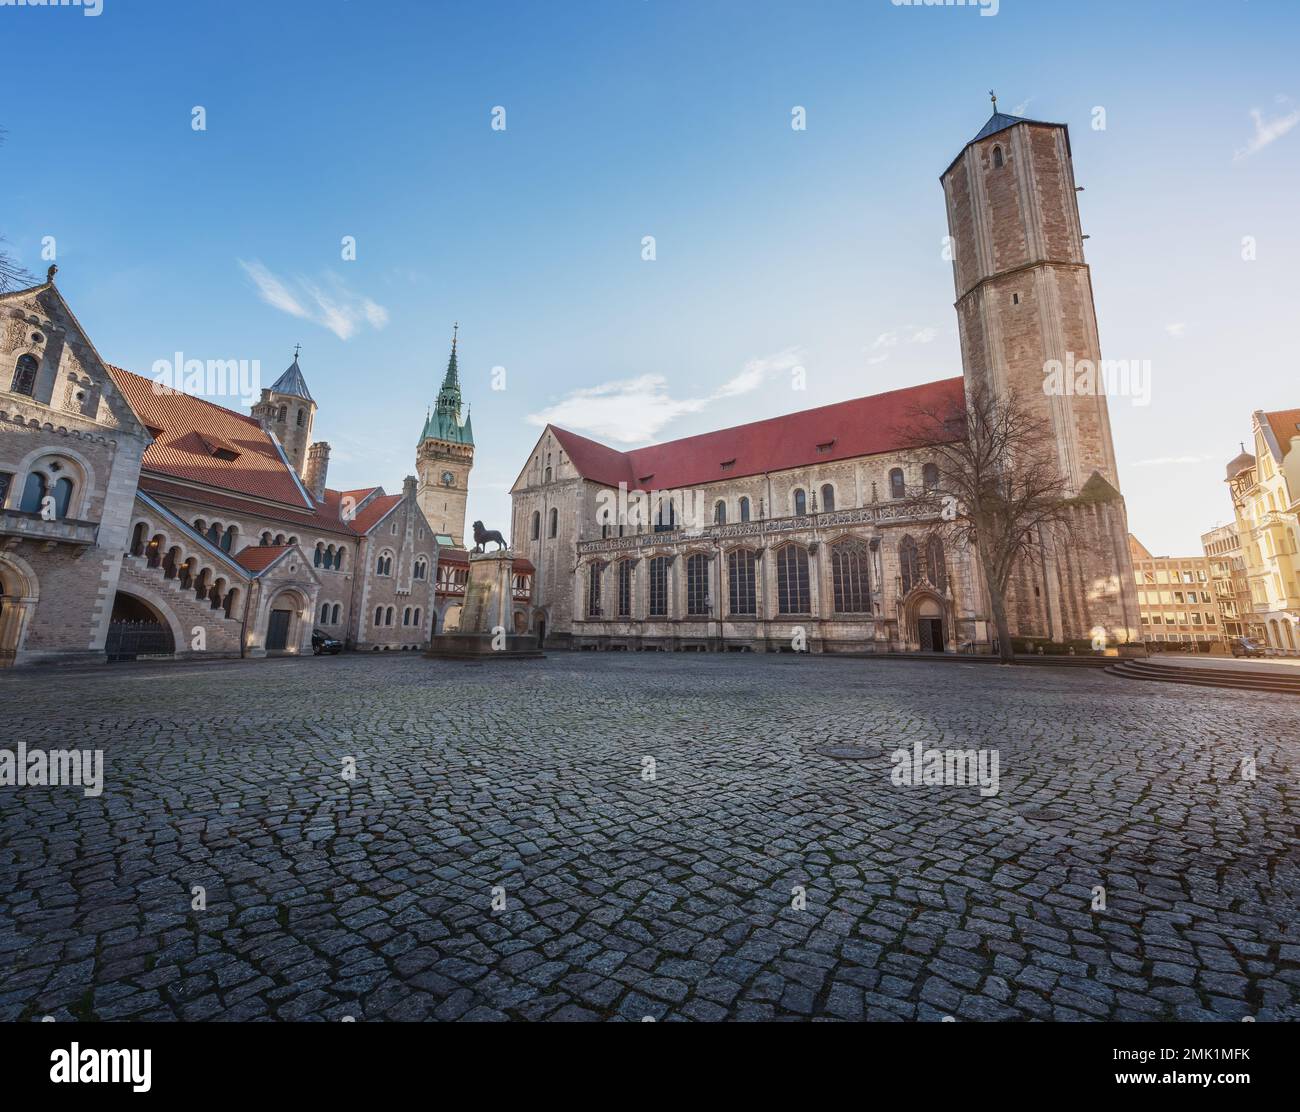 Burgplatz (place du château) avec St. Blasii Cathedral, Dankwarderode Castle, Brunswick Lion and Town Hall Tower - Braunschweig, Basse-Saxe, Allemagne Banque D'Images